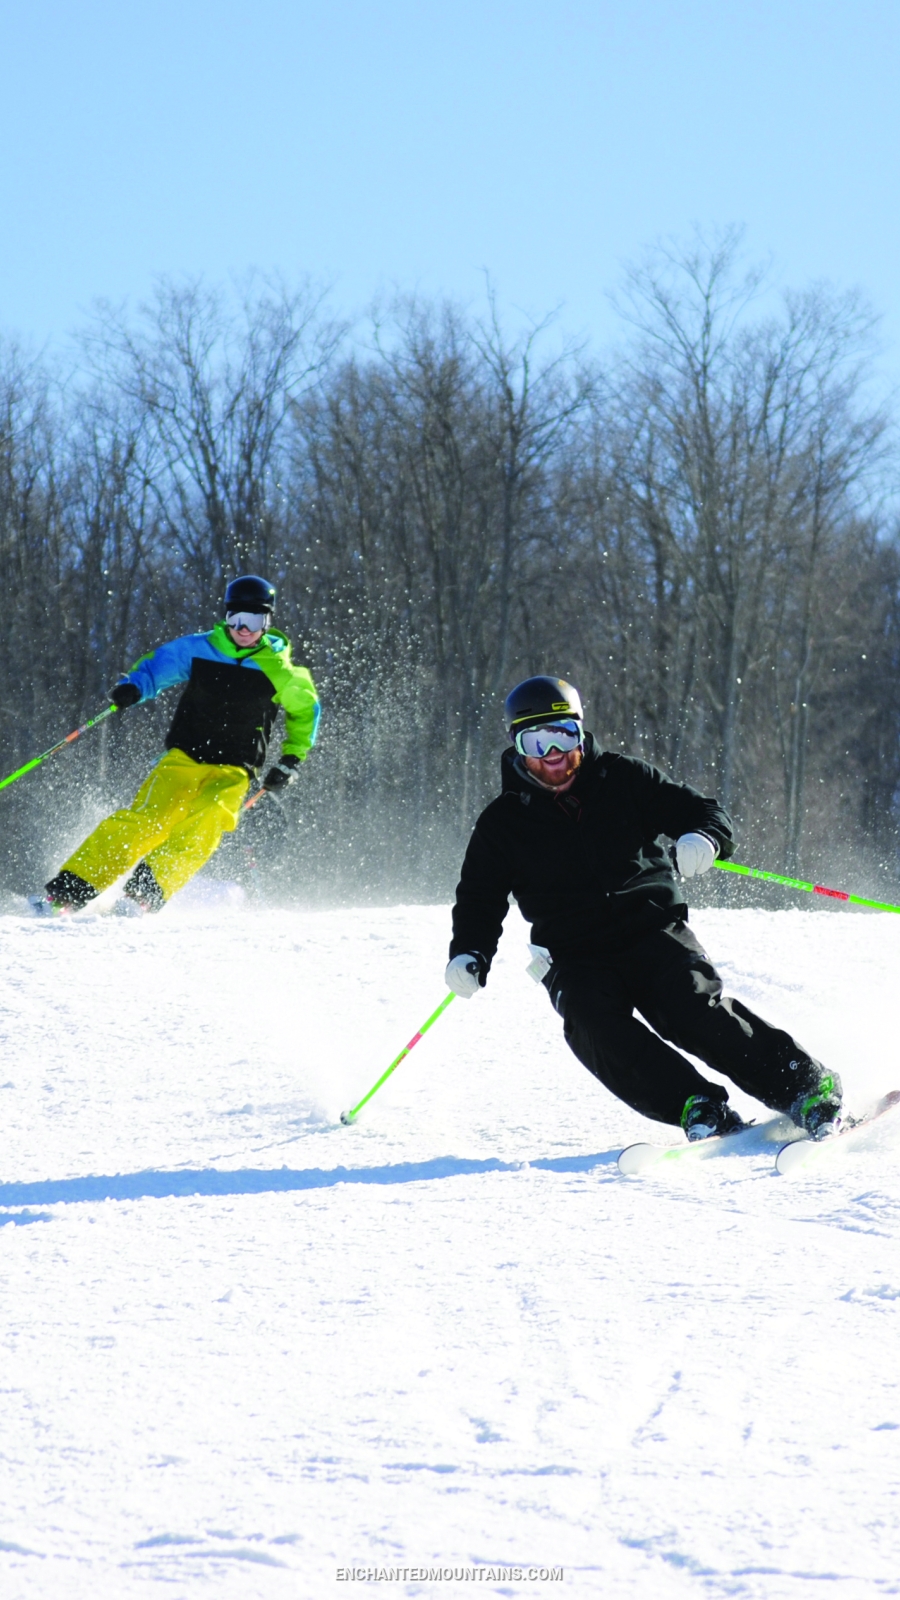 Skiers speeding downhill at HoliMont